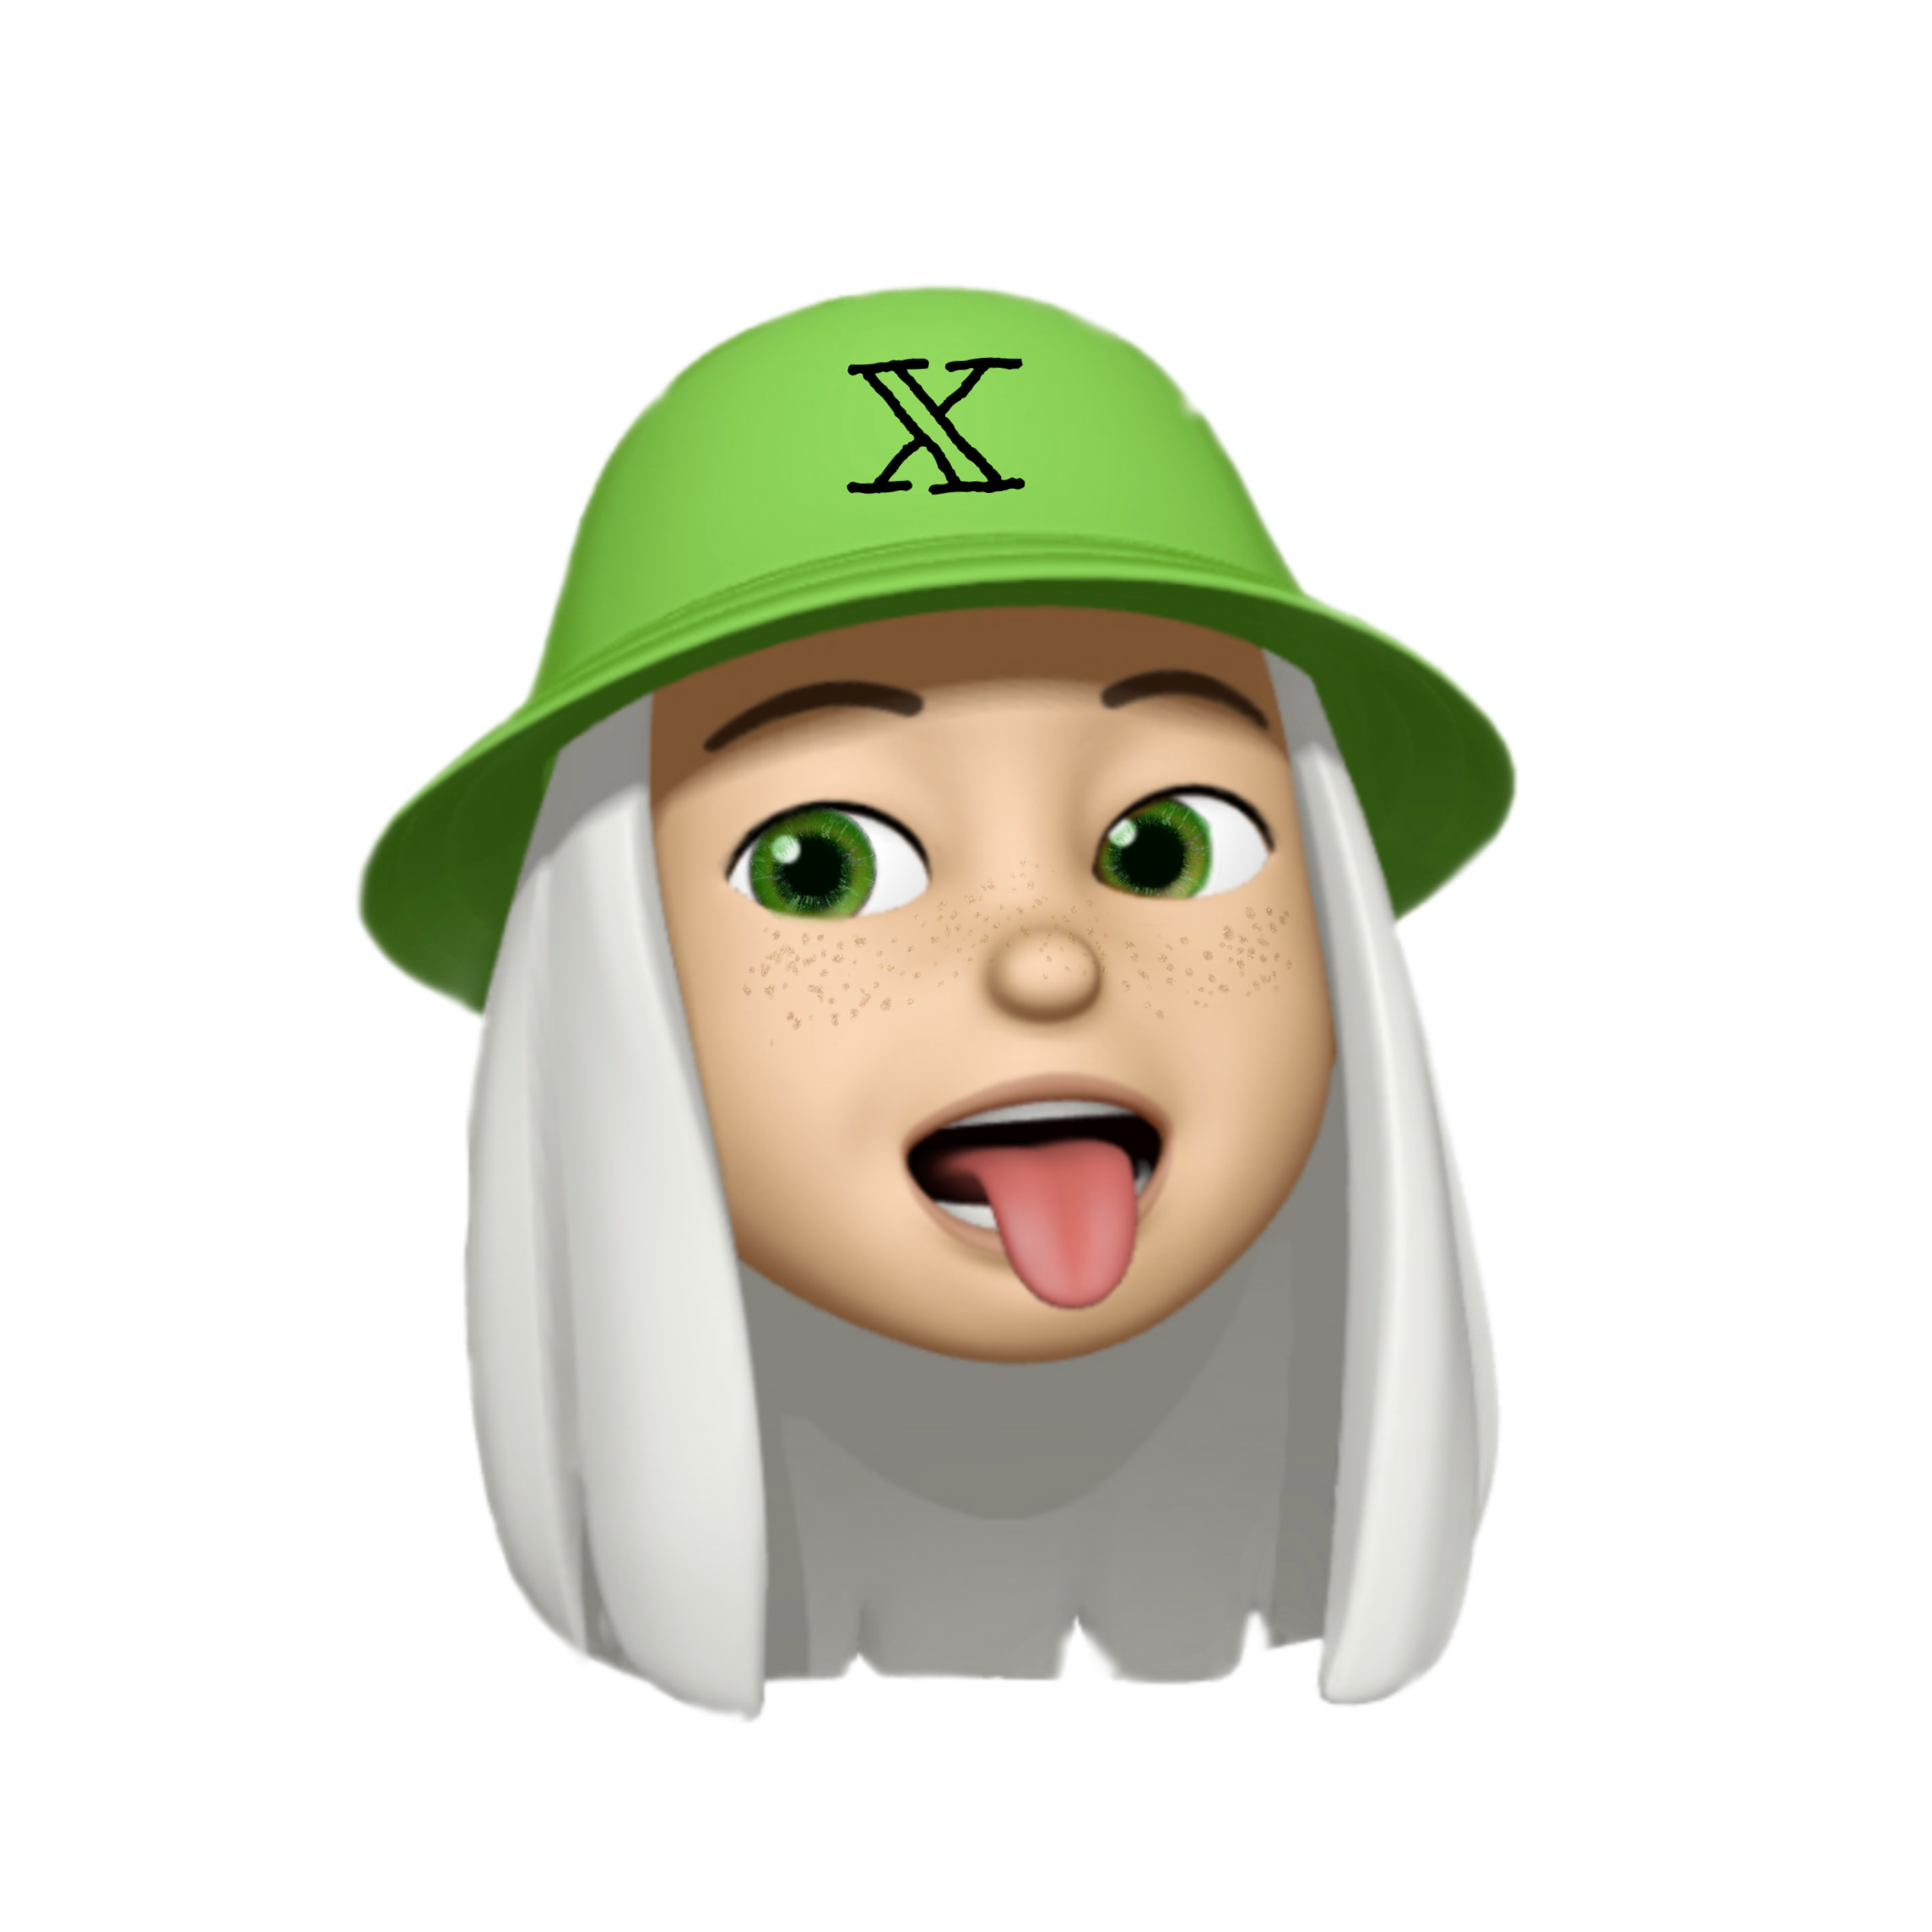 Аватарки для whatsapp для мальчиков. Эмодзи. Эмодзи на зеленом фоне. Мемоджи ЭМОДЖИ. ЭМОДЖИ девушка.